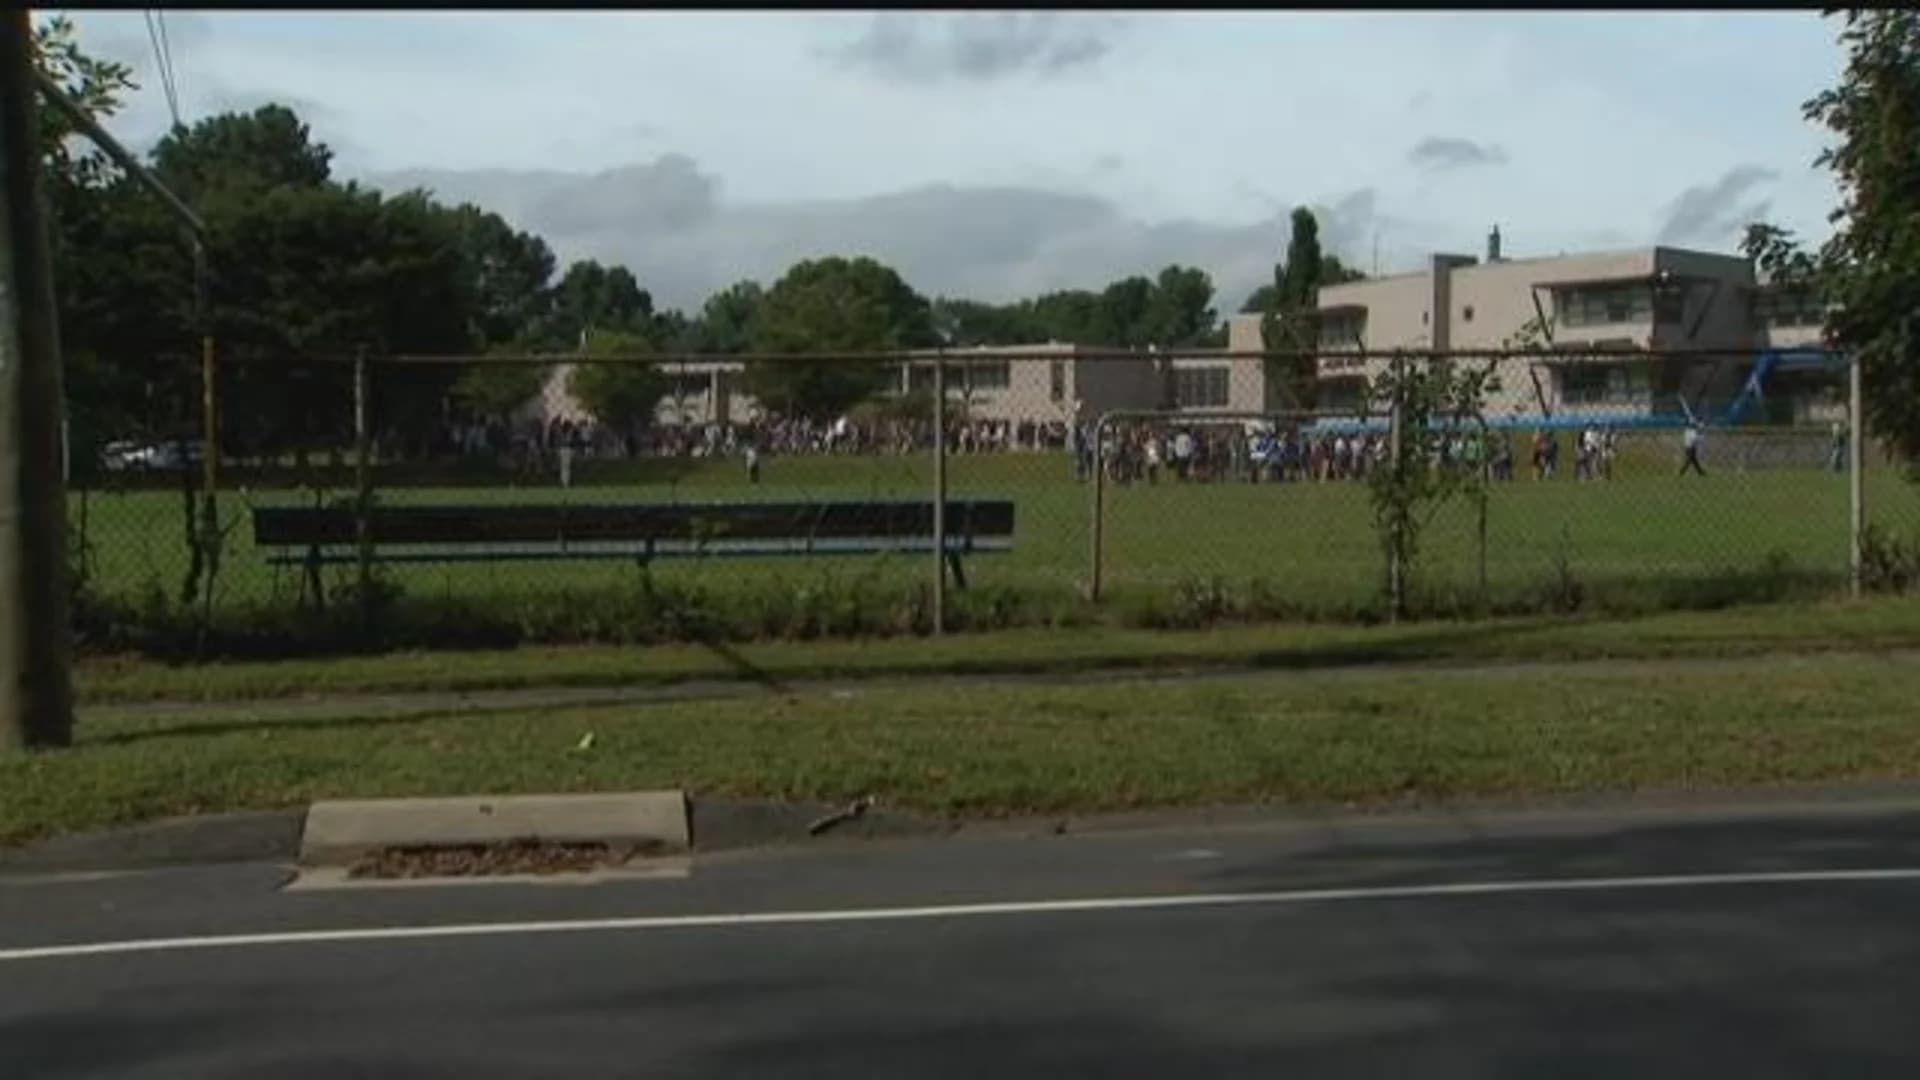 Petition against 'monster' middle school makes waves in Westport